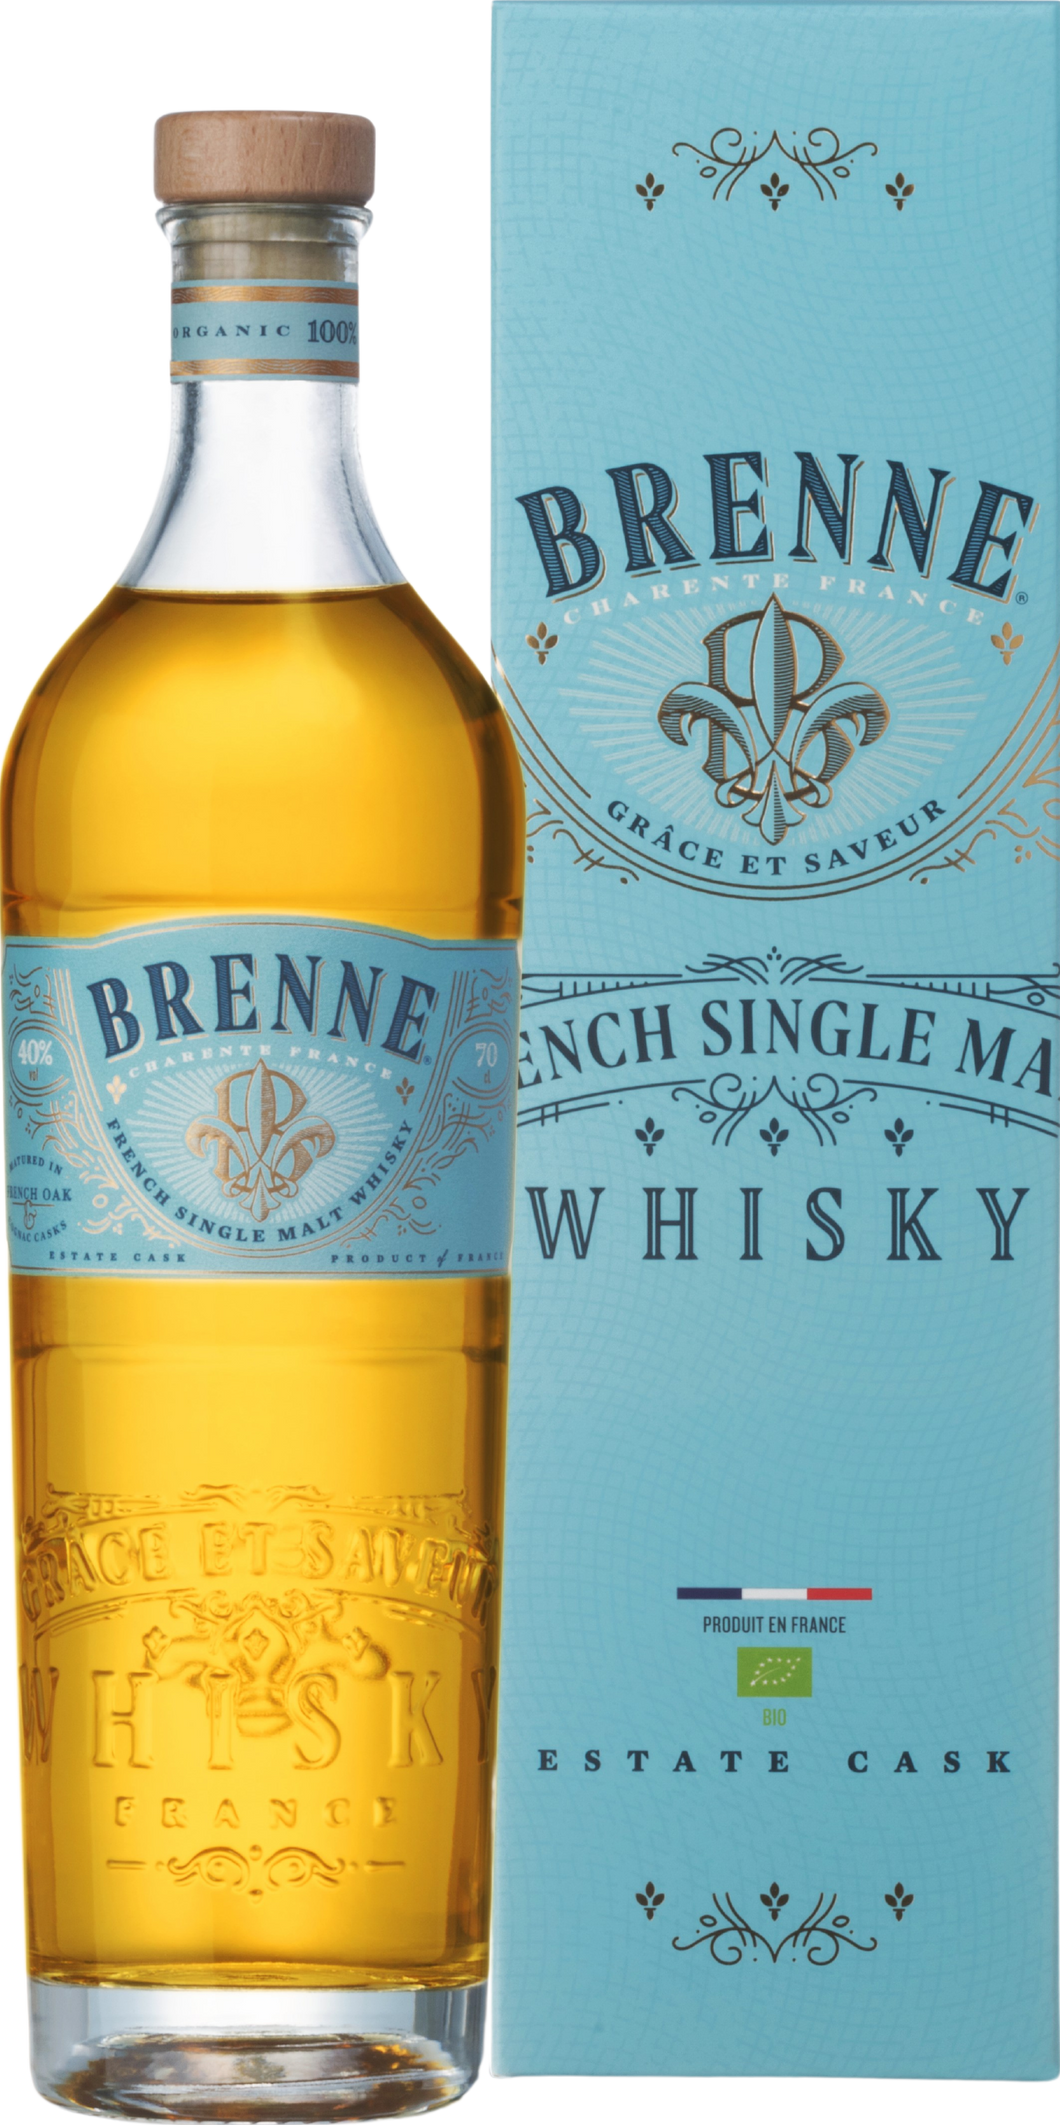 Brenne French Bio Single Malt Estate Cask Whisky, 0,7l - SPRITHÖKER